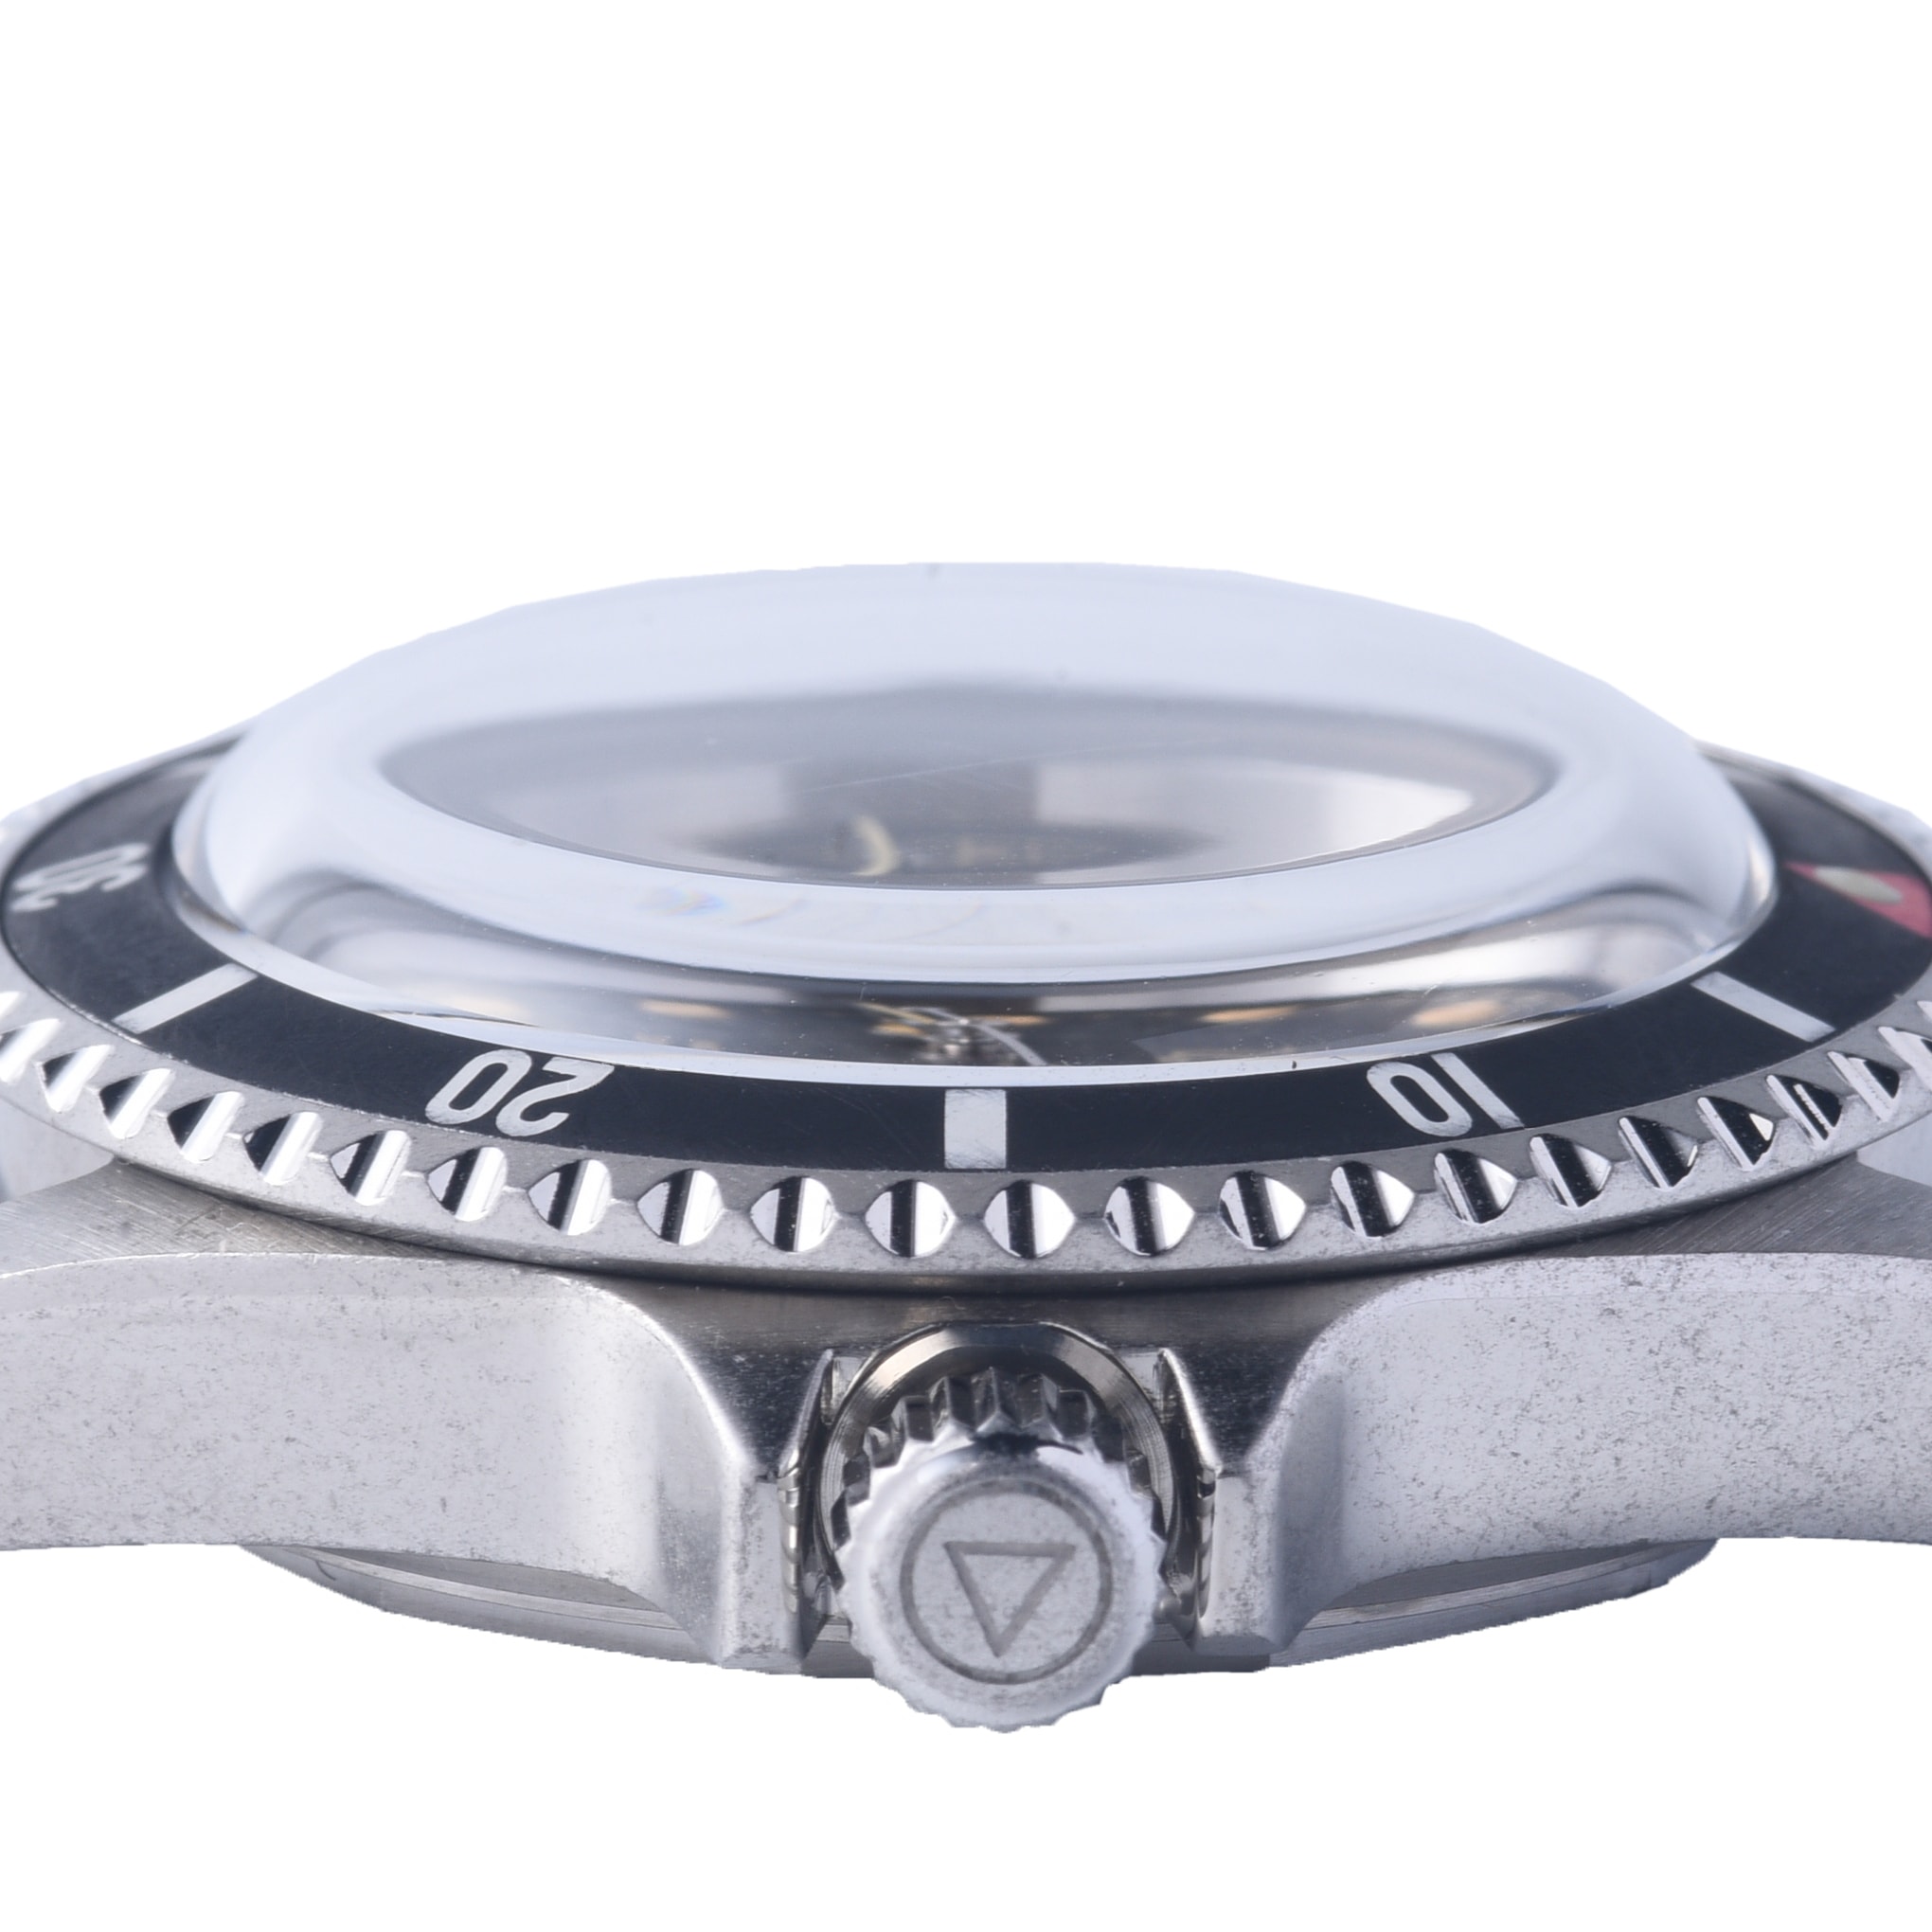 MADNESS x WMT Watches 聯乘腕錶釋出預購情報